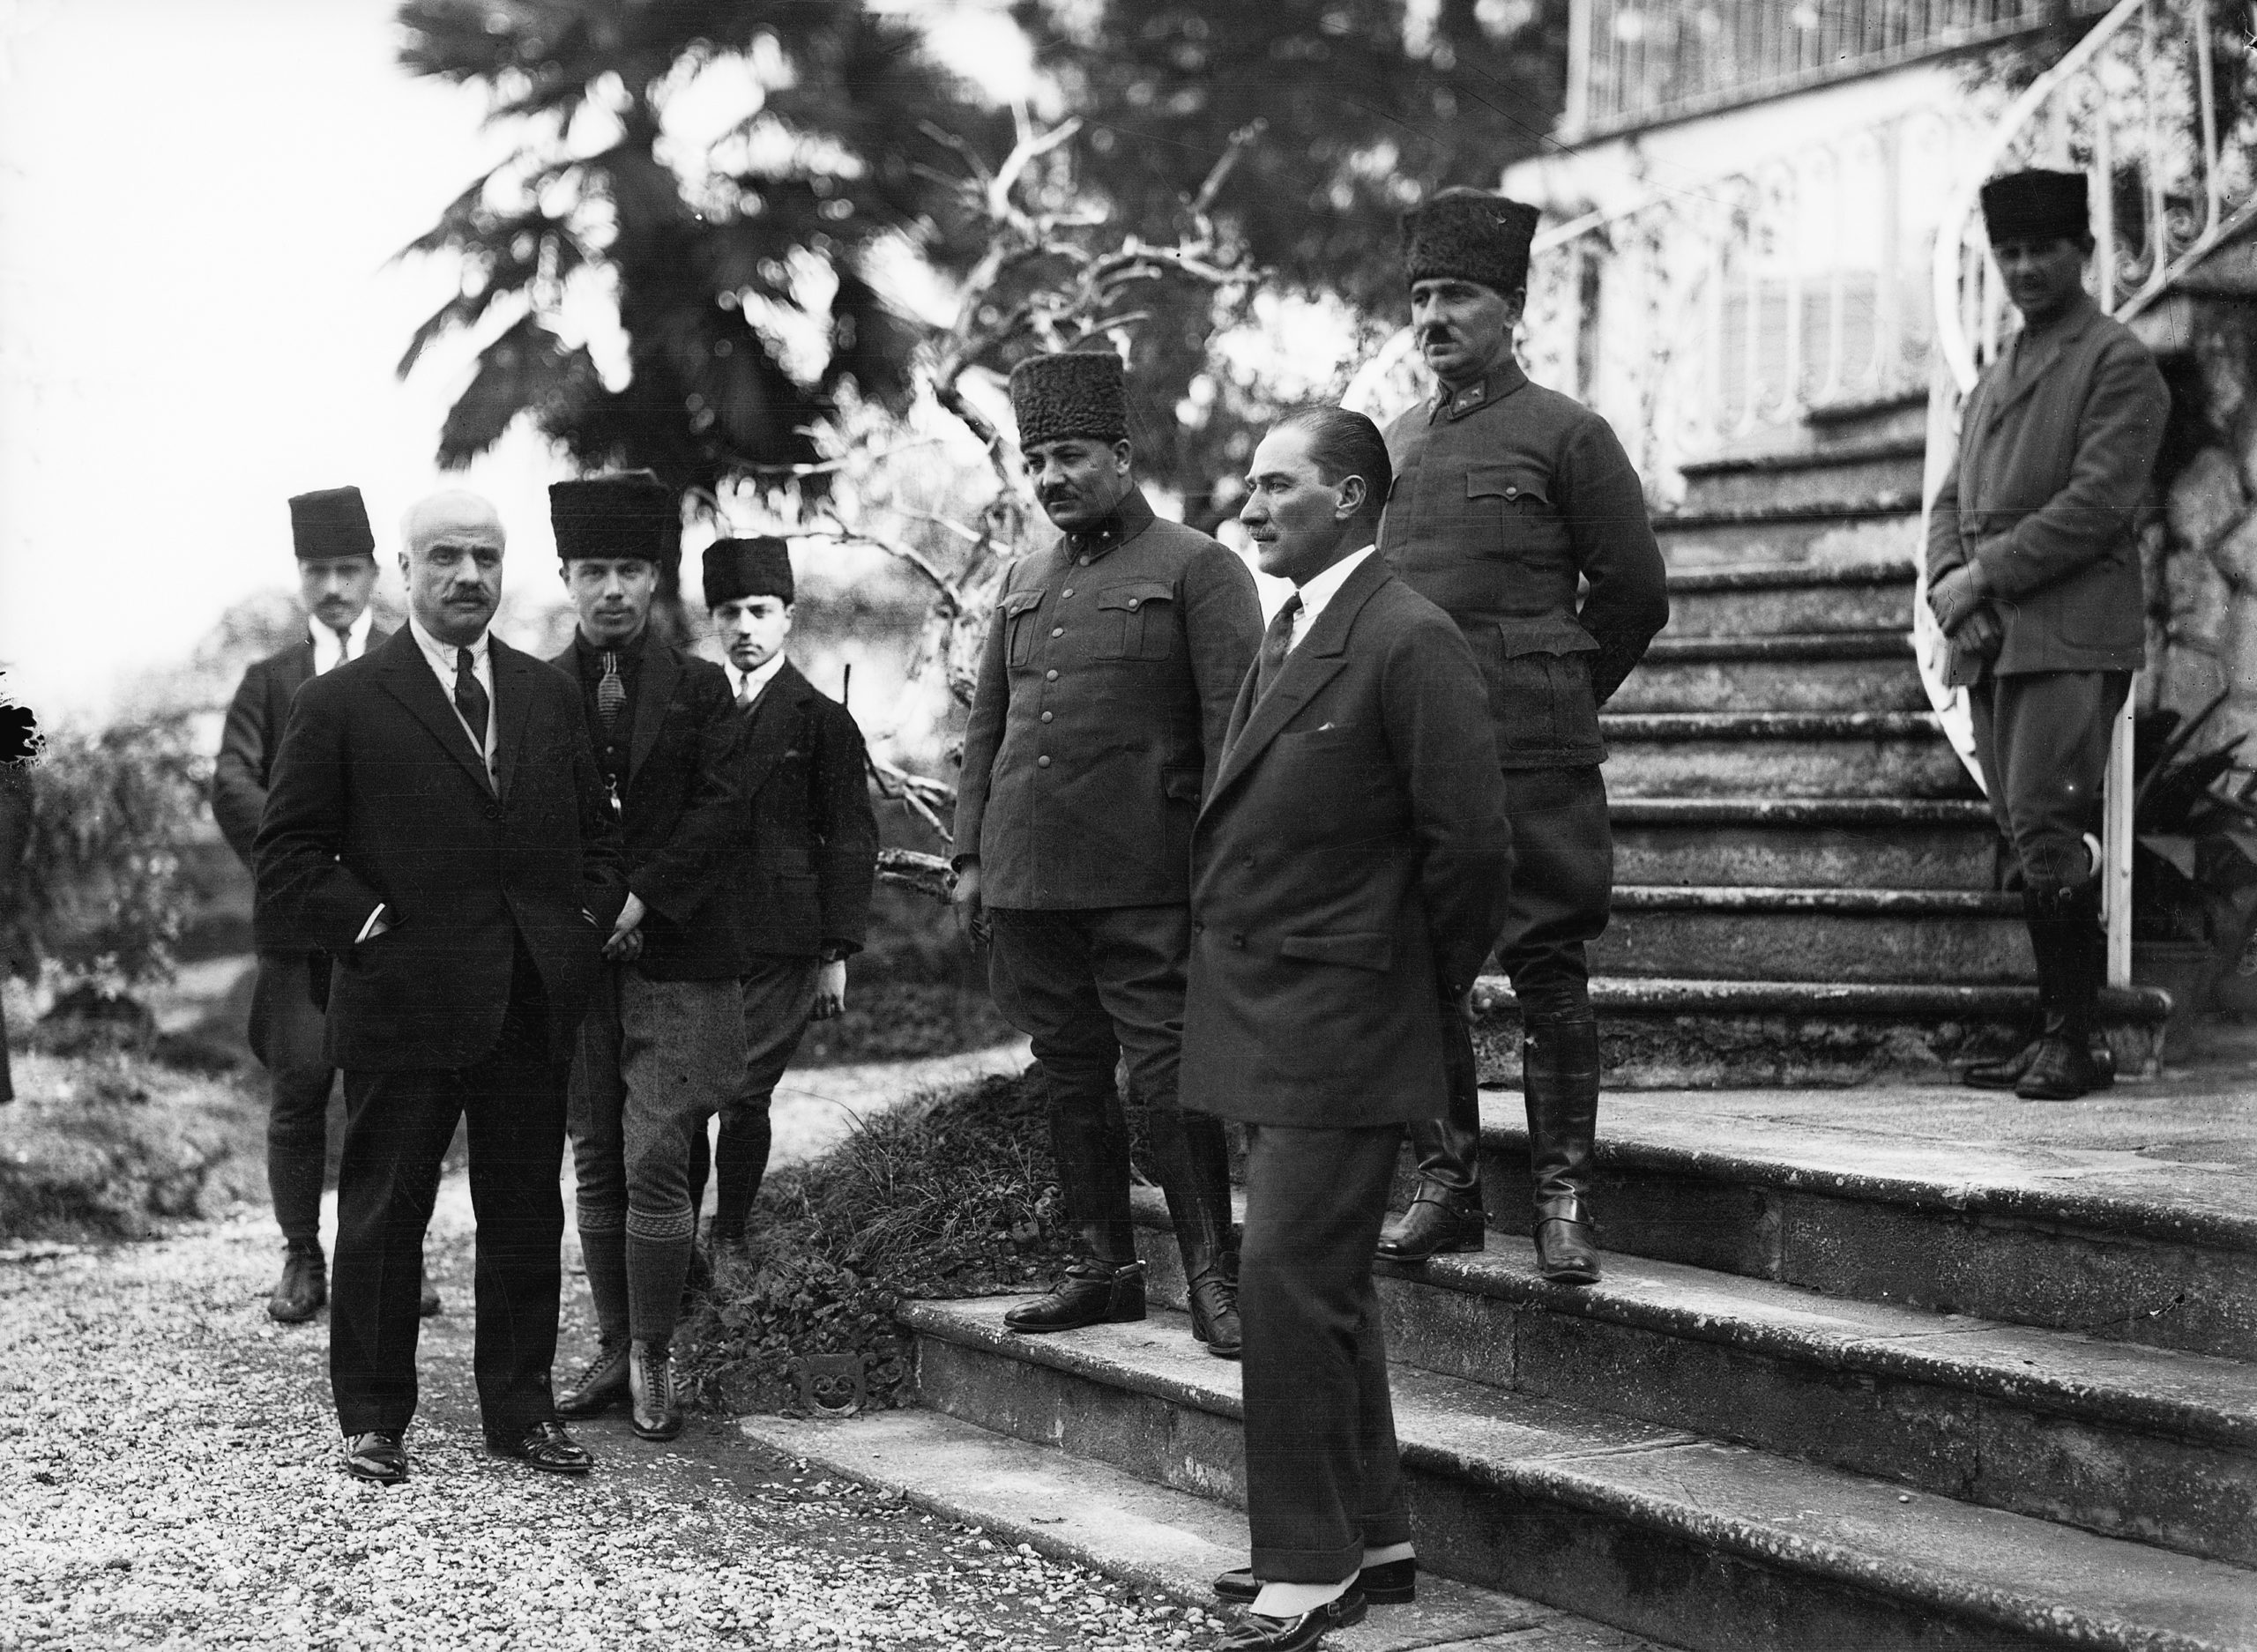 Mustafa Kemal & Officers On Stairs